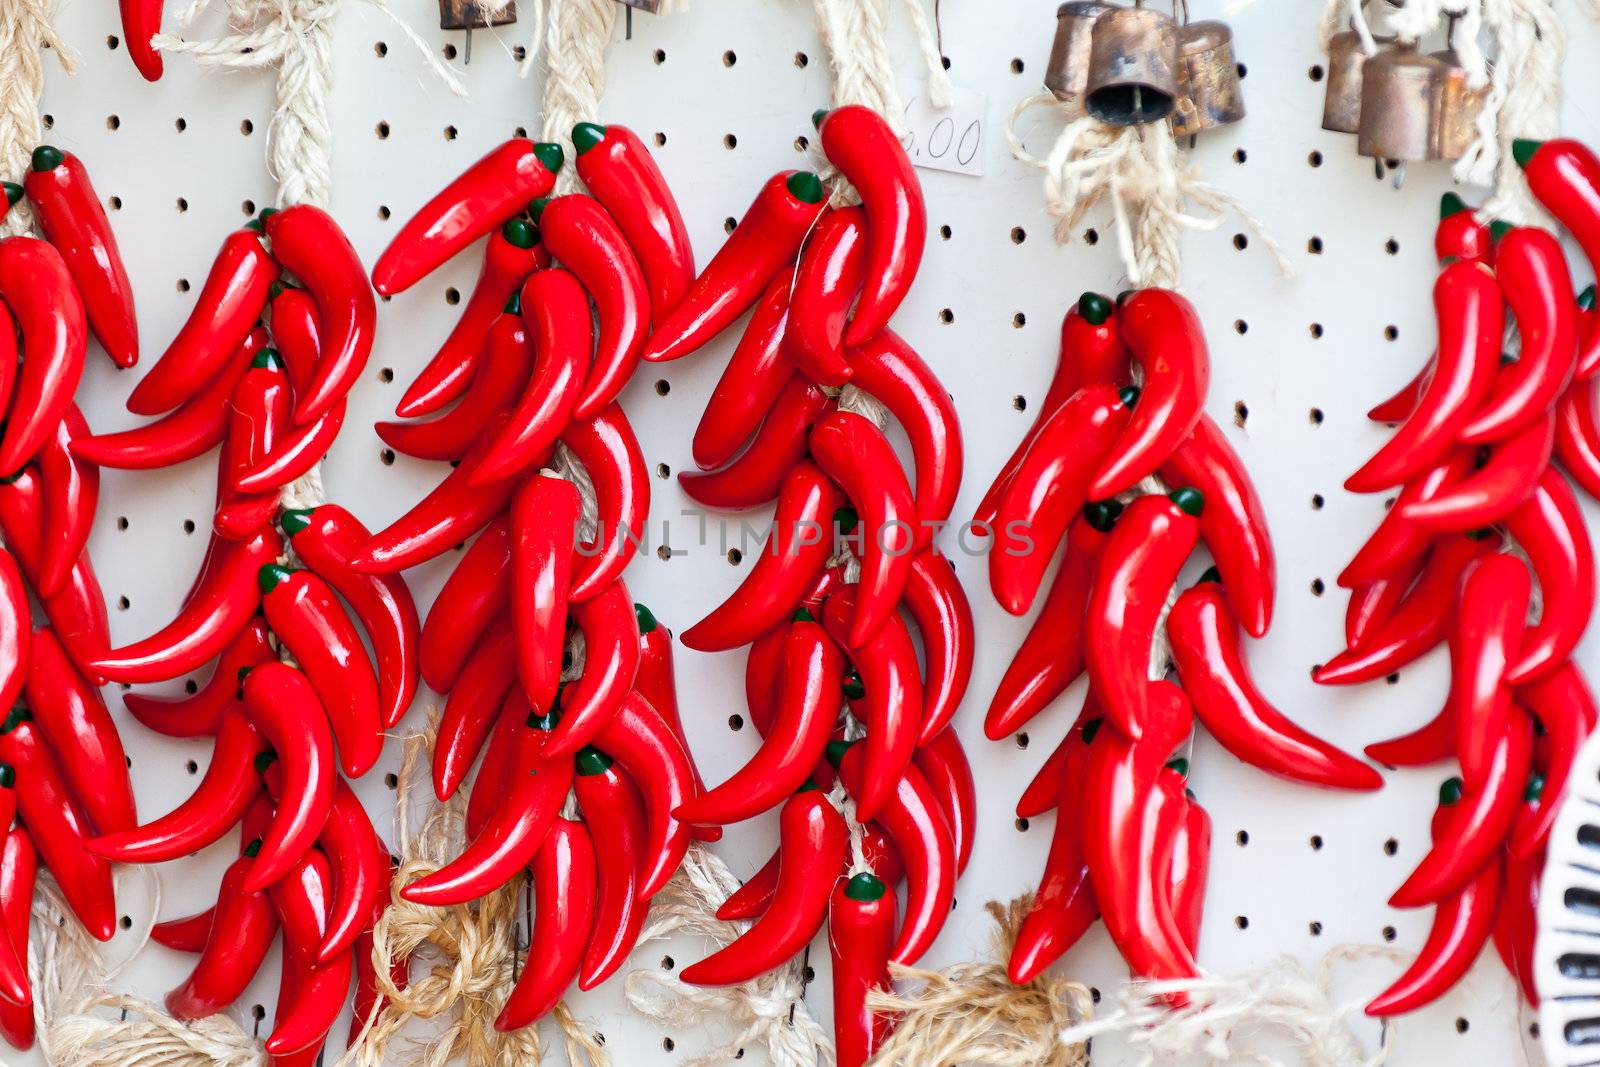 Hanged peppers by dario_lo_presti